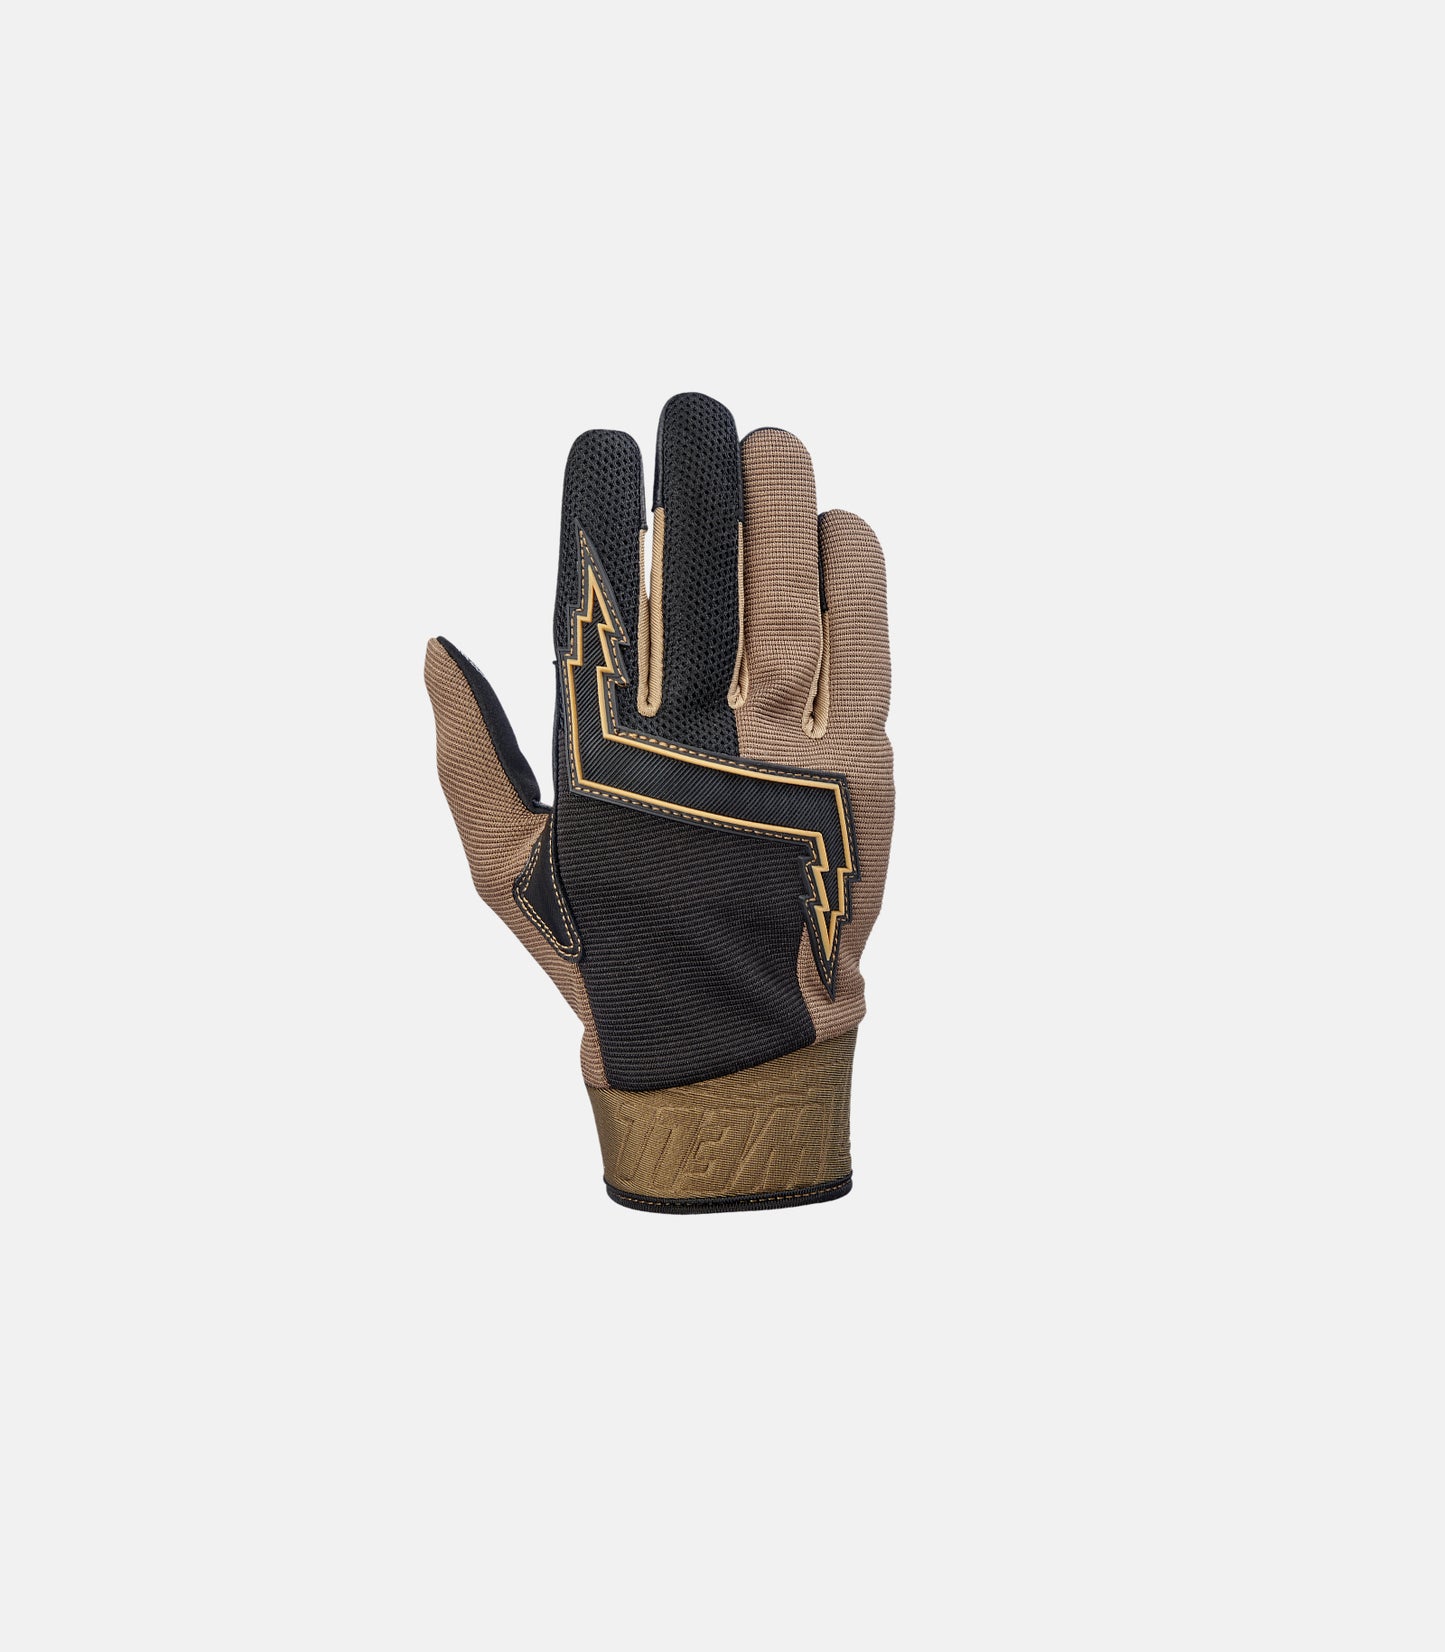 BILTWELL Baja Gloves - Chocolate/Black